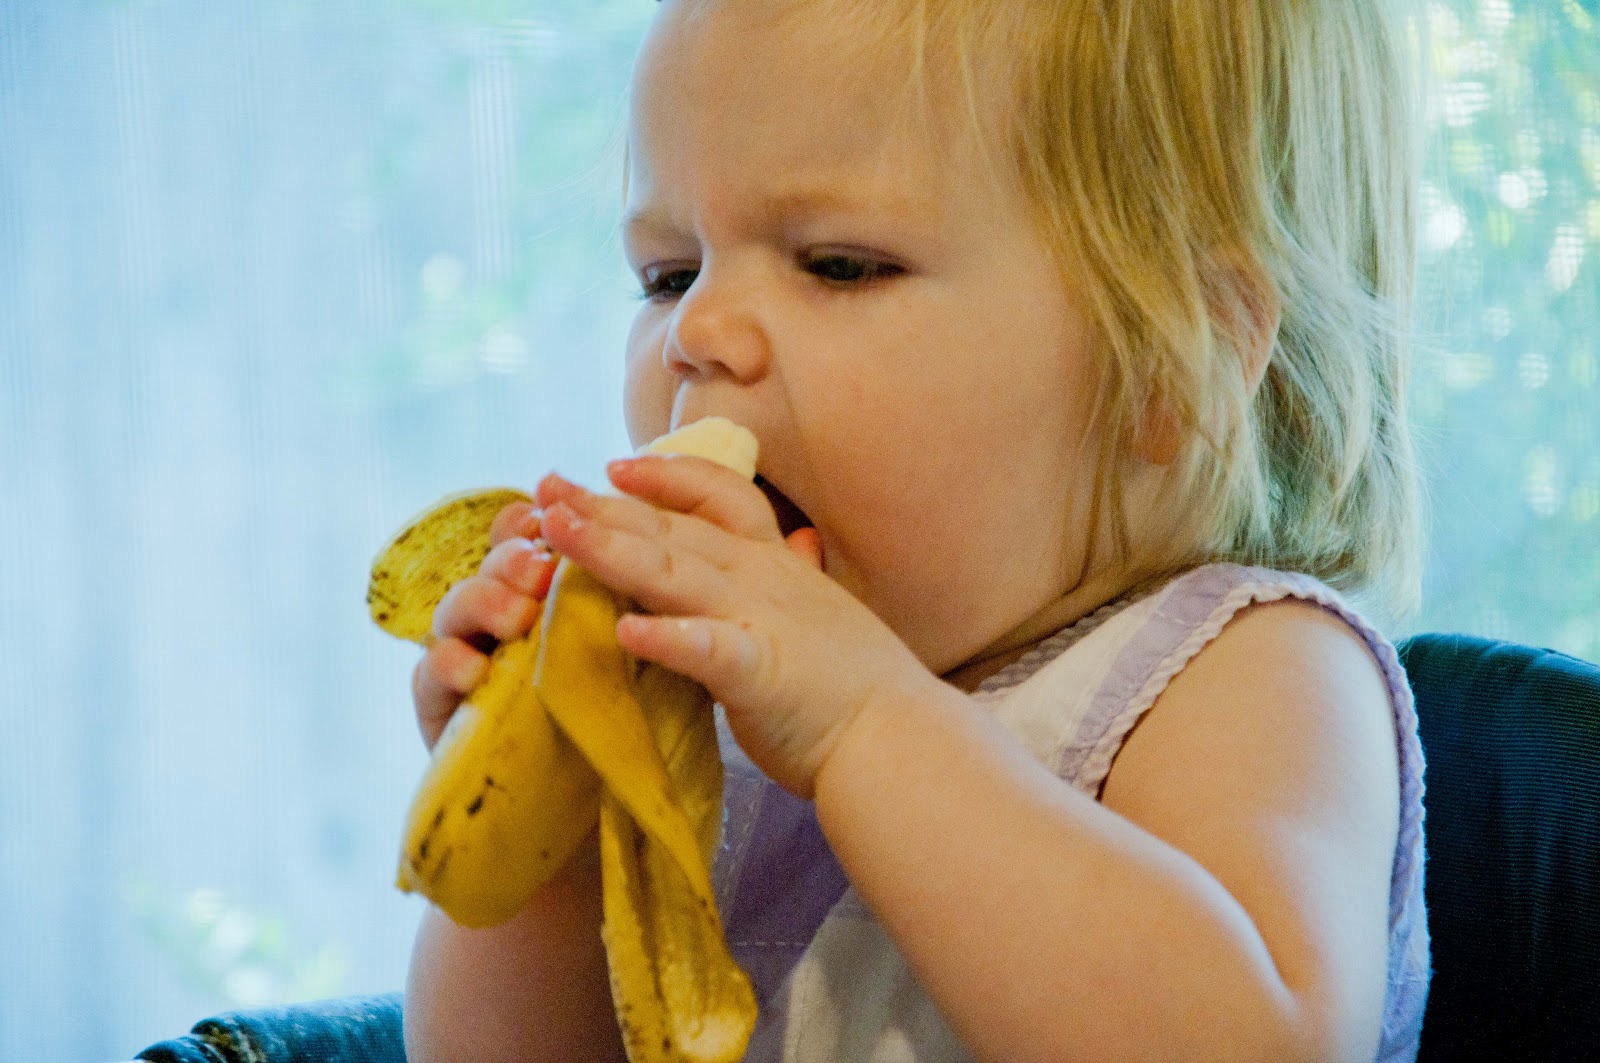 Baby Eating Banana